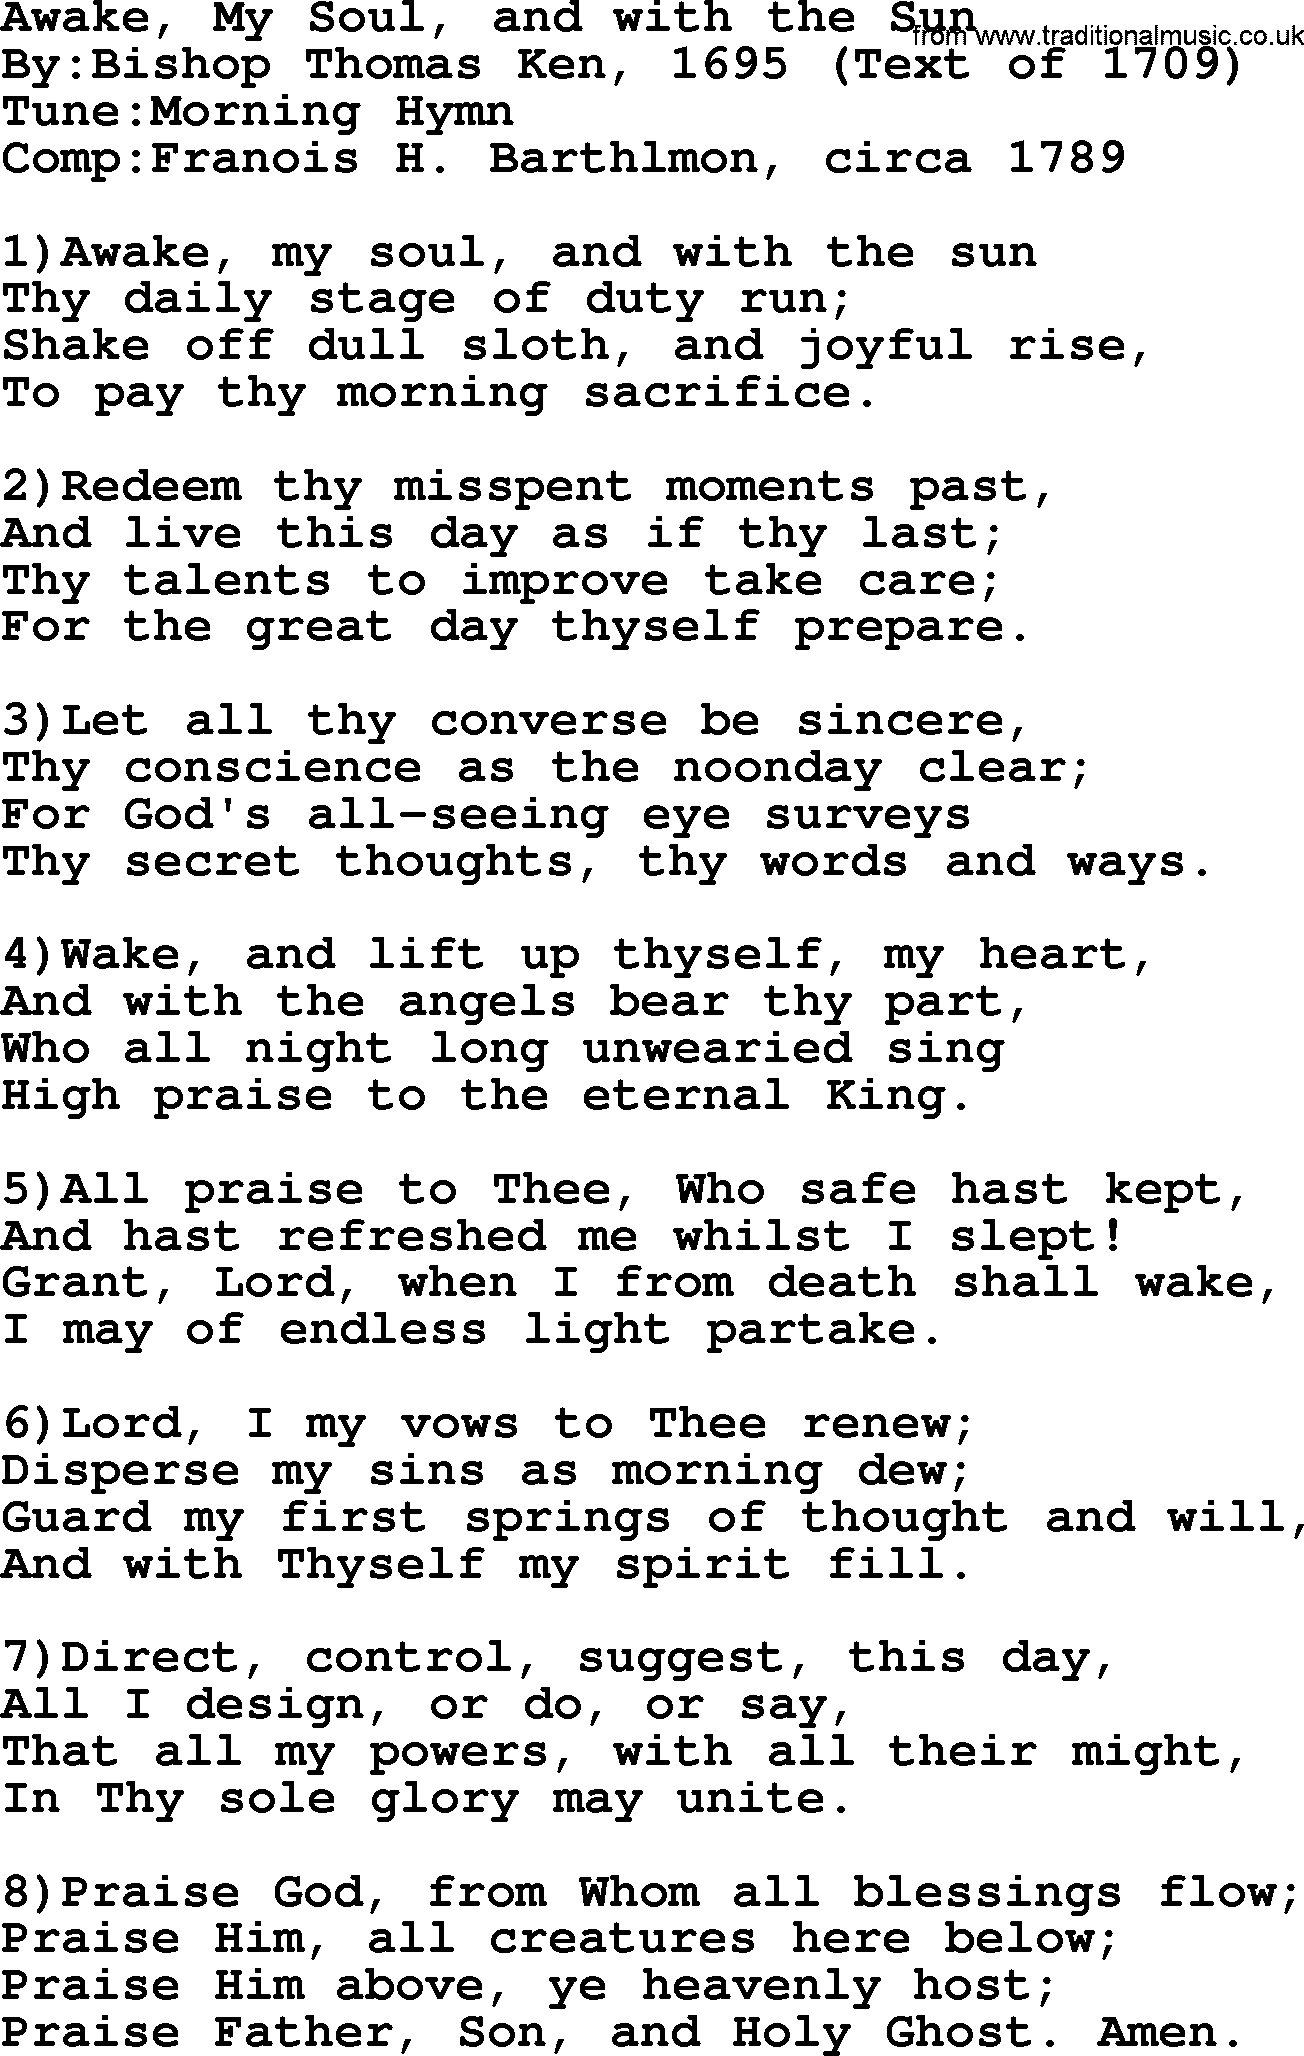 Methodist Hymn: Awake, My Soul, And With The Sun, lyrics